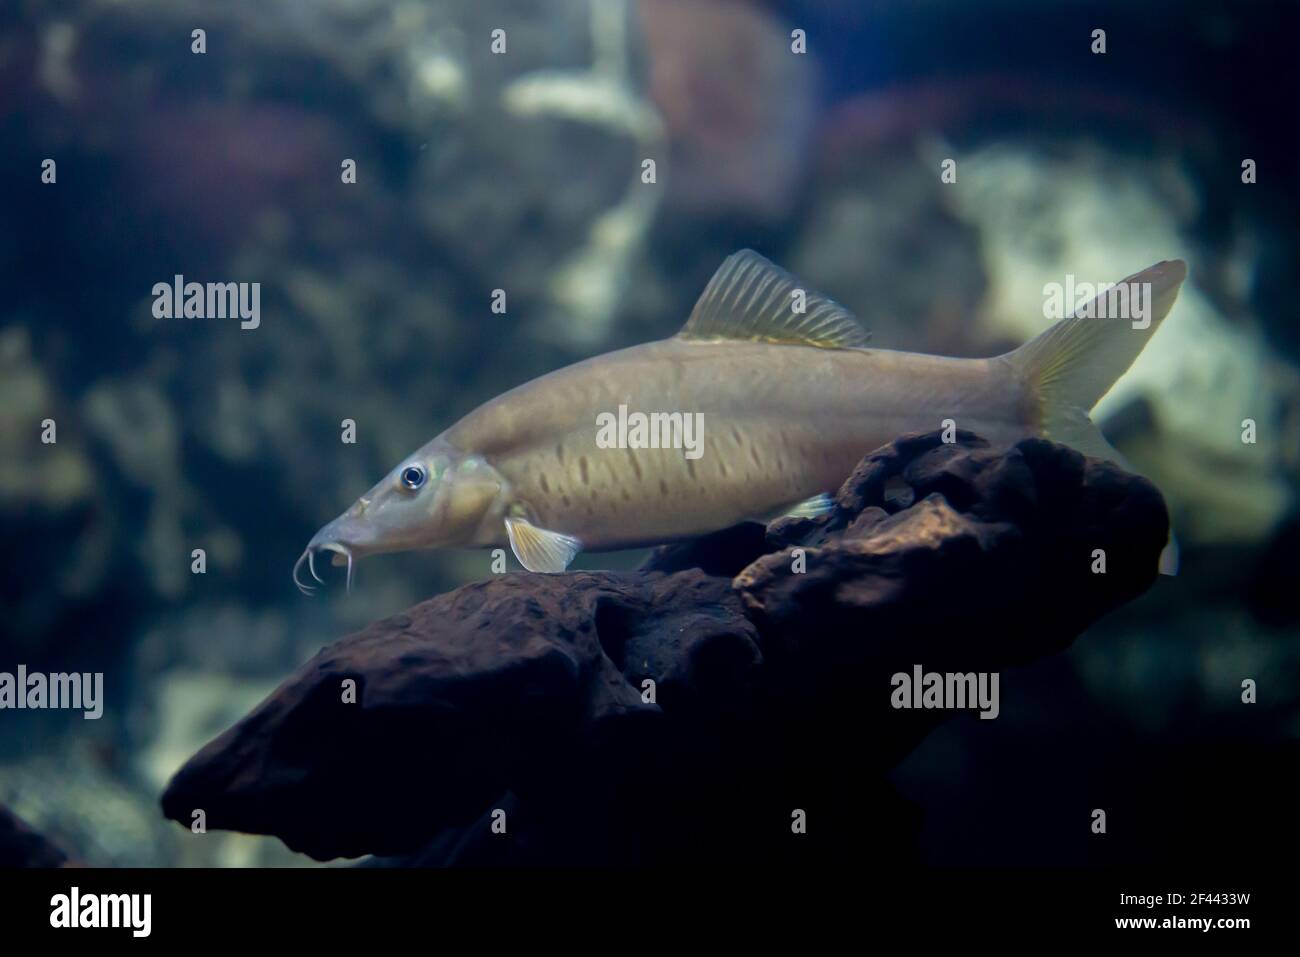 TIGER LOACH or Botia helodes fish in the aquarium of thailand Stock Photo